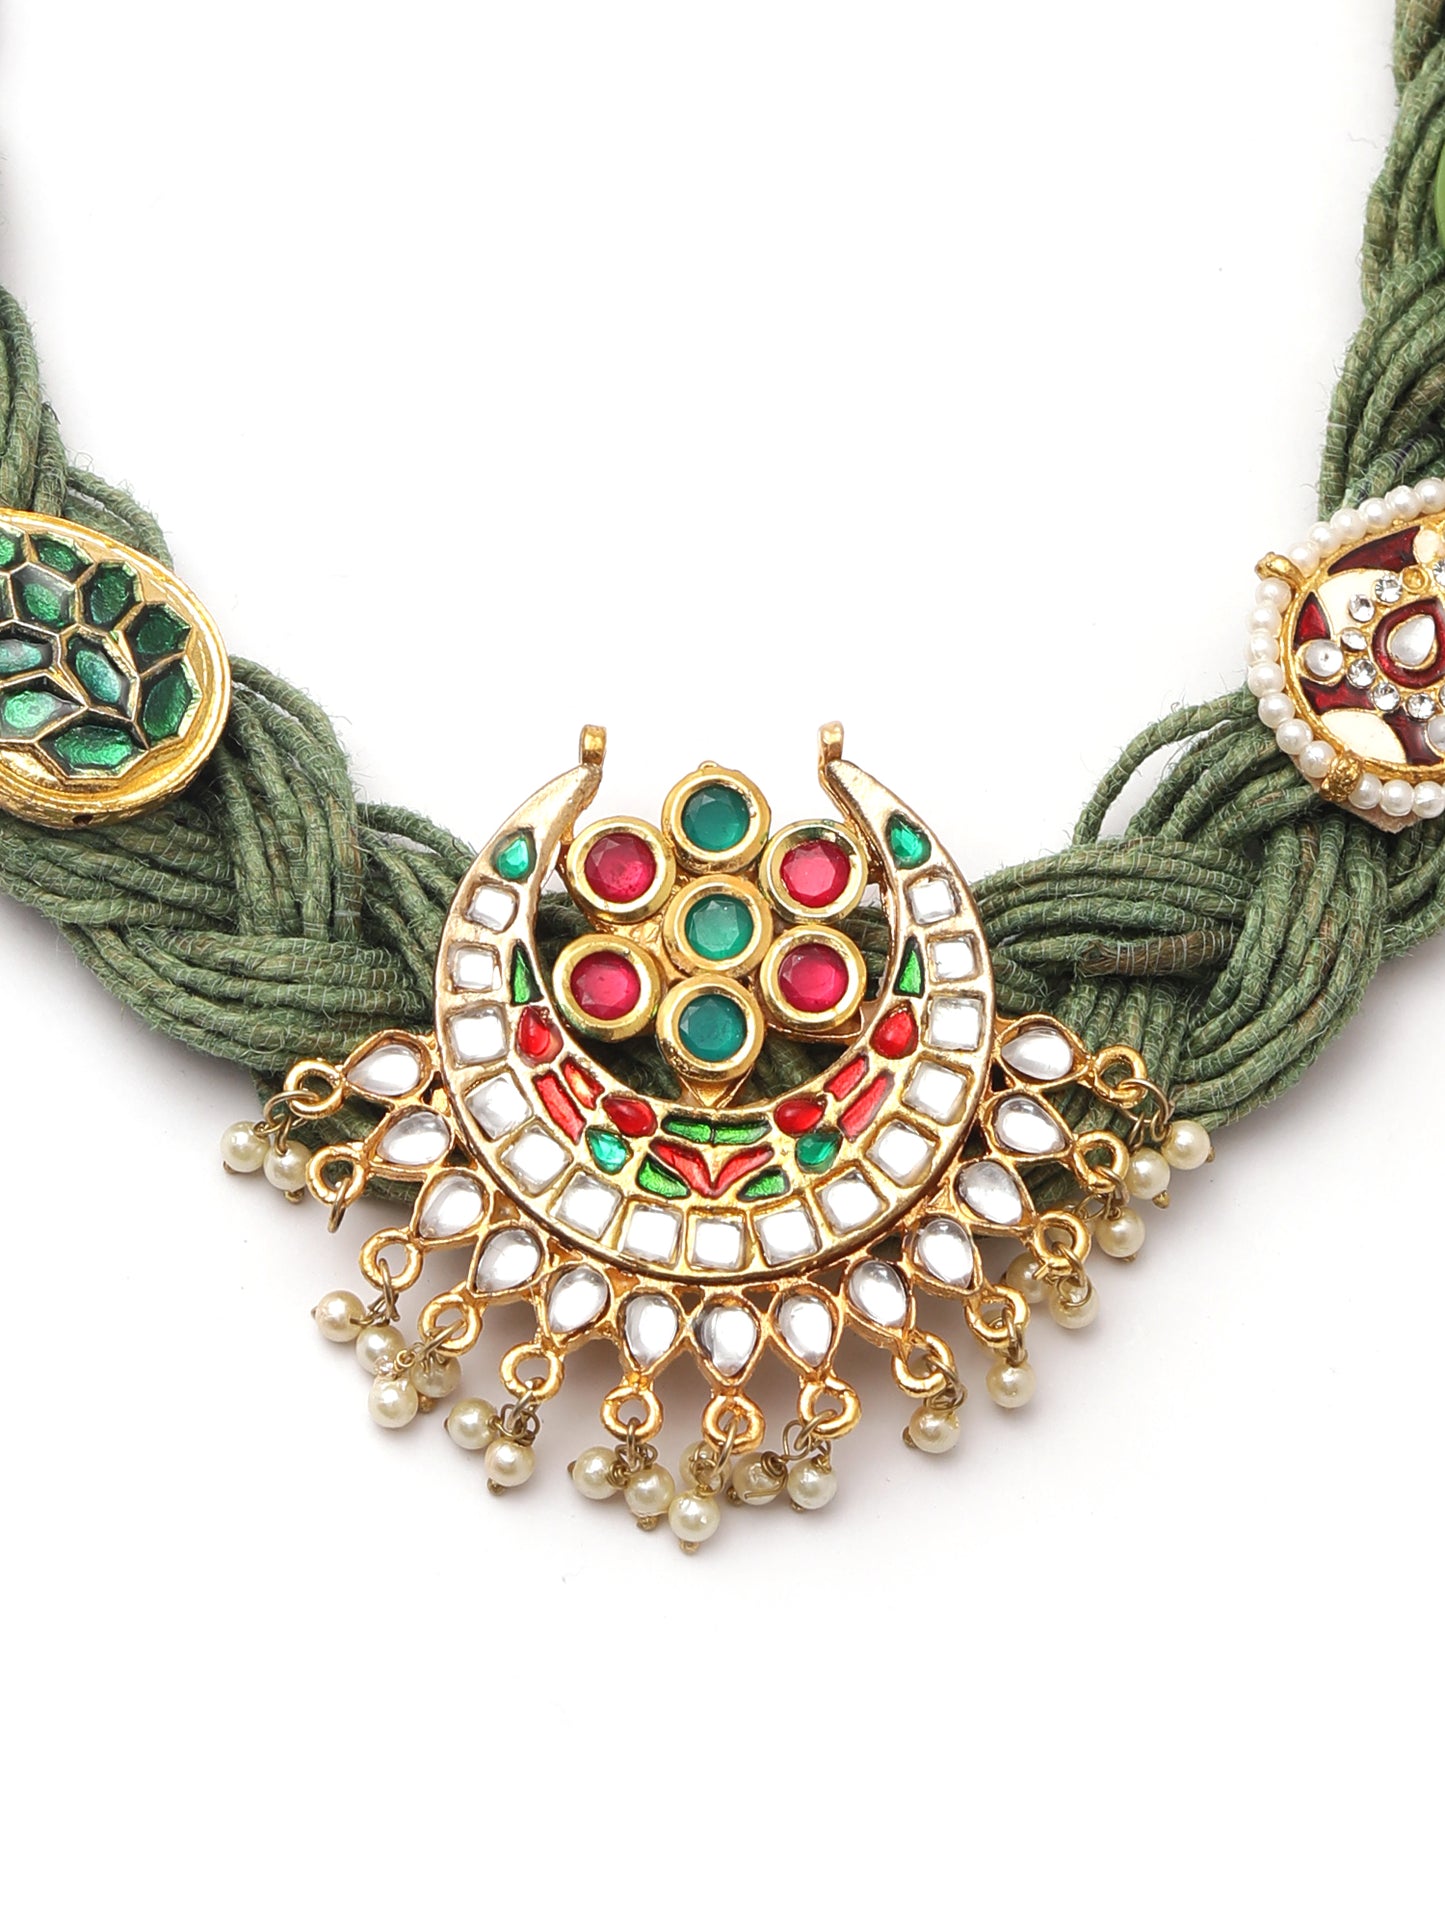 The Ornate Crochet Jute Necklace